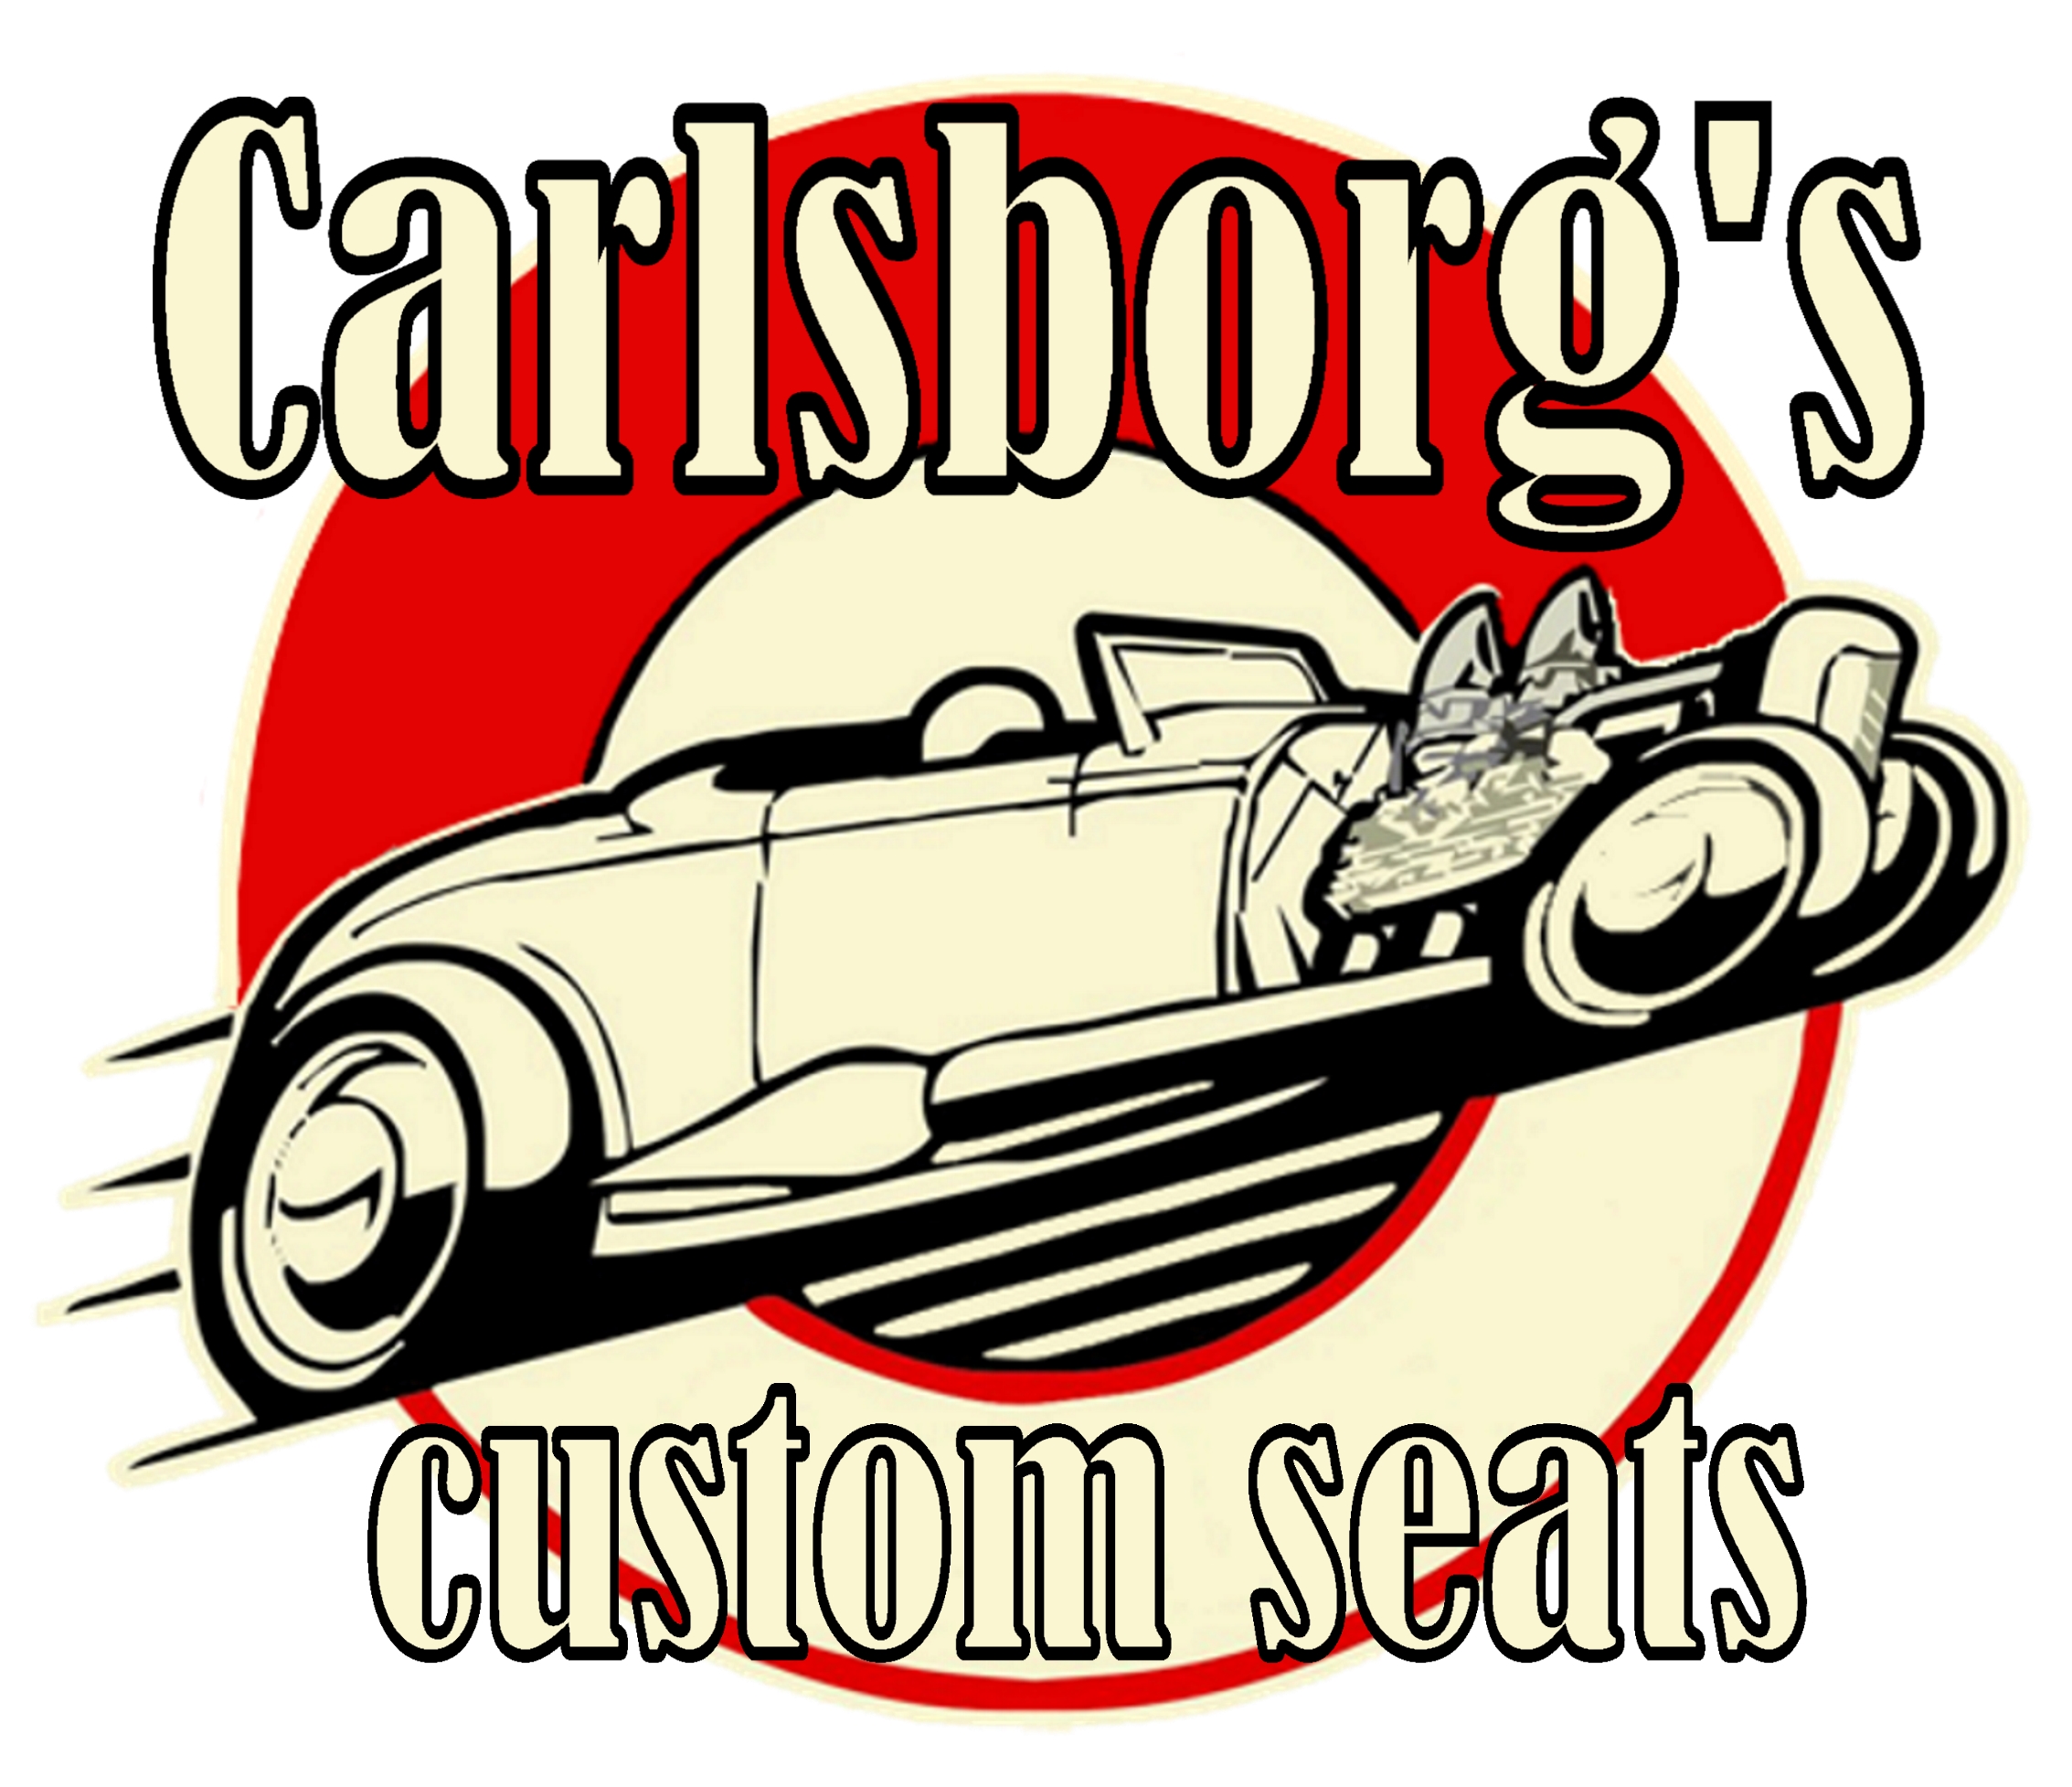 Carlsborg's Custom Seats